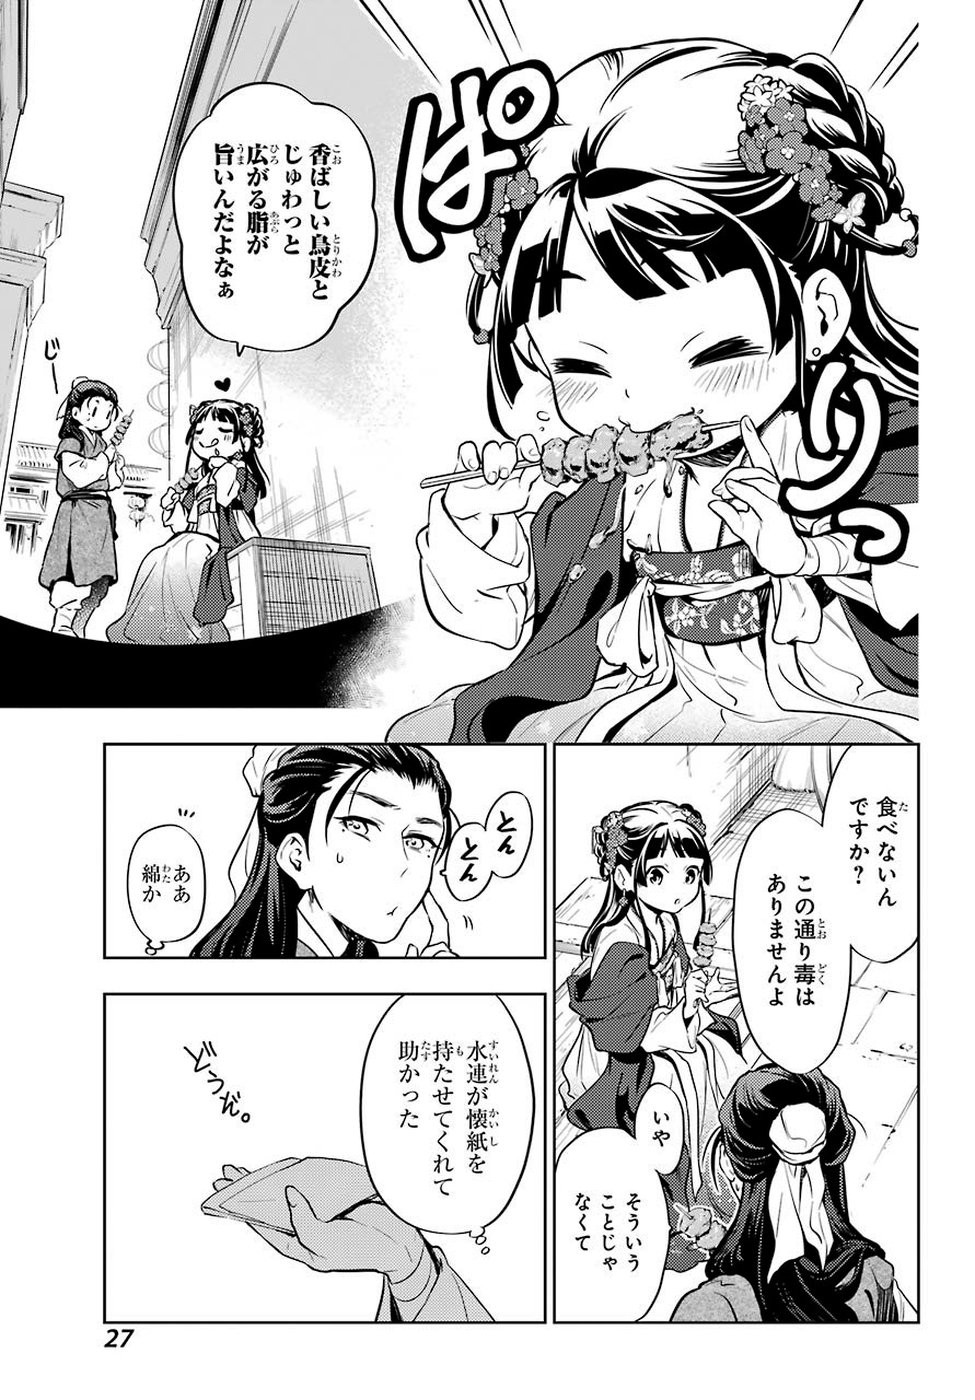 Kusuriya no Hitorigoto - Chapter 28 - Page 20